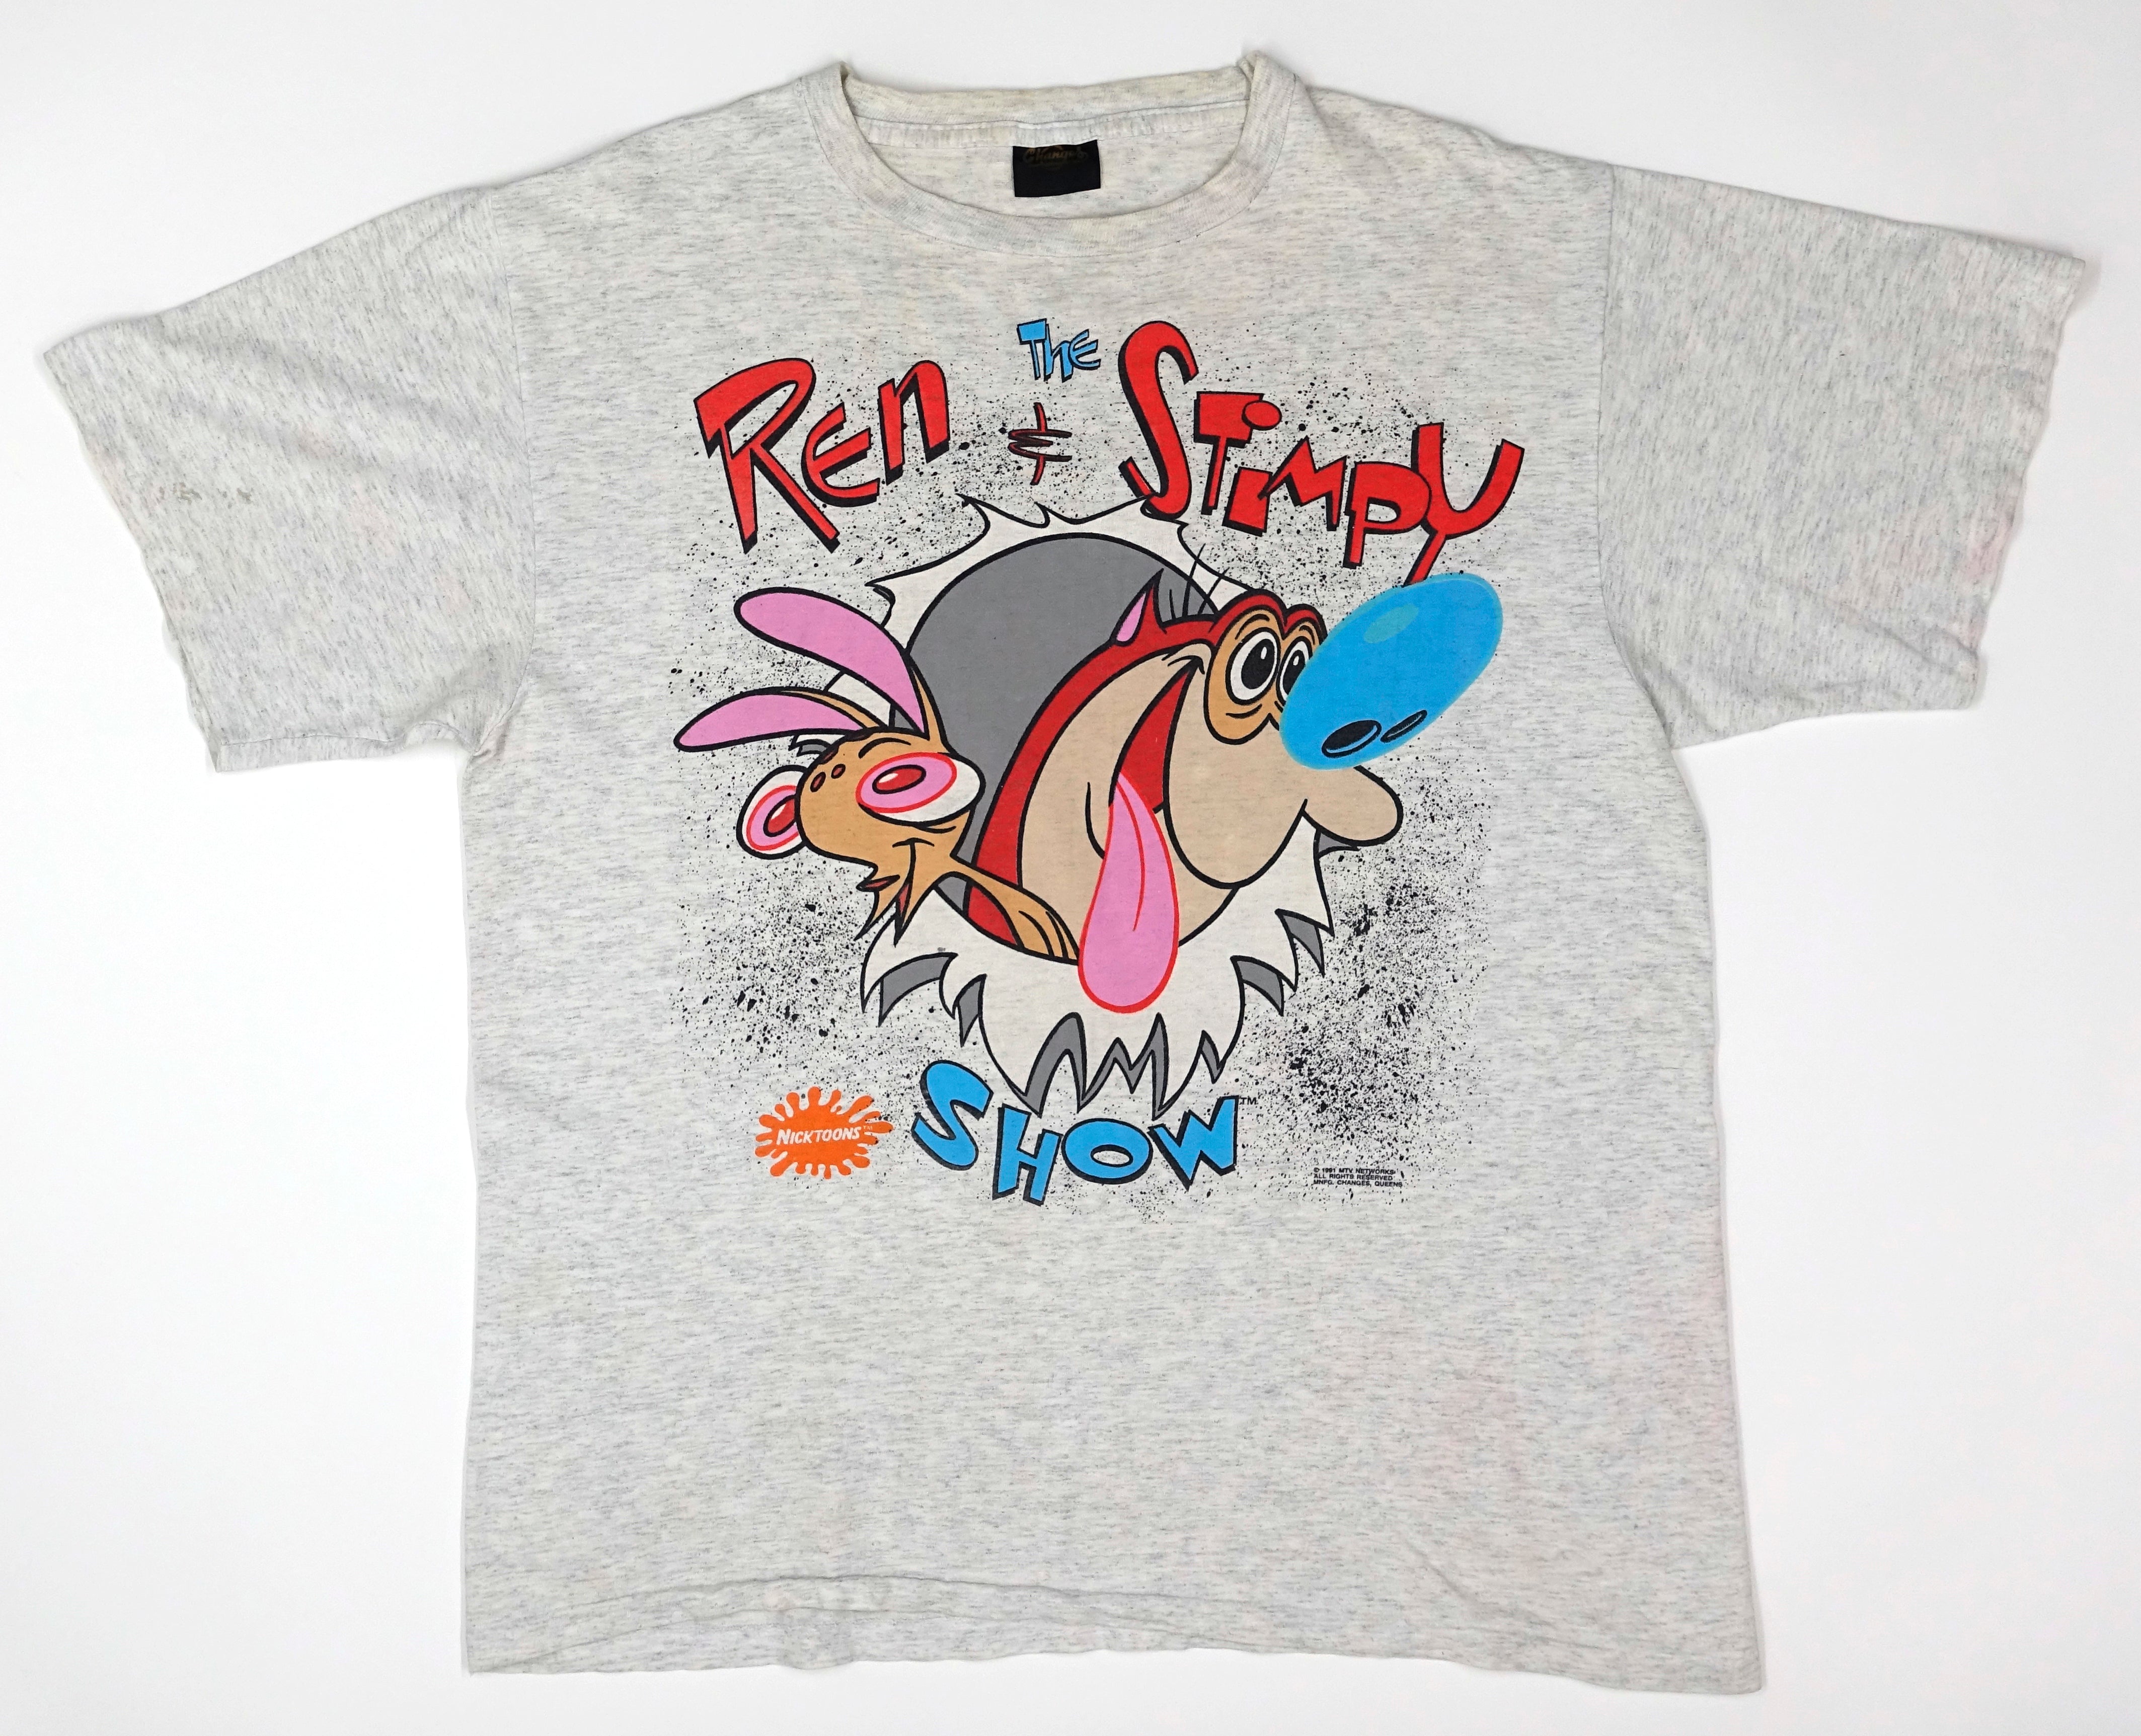 Ren & Stimpy - the Ren & Stimpy Show ©1991 Shirt Size XL